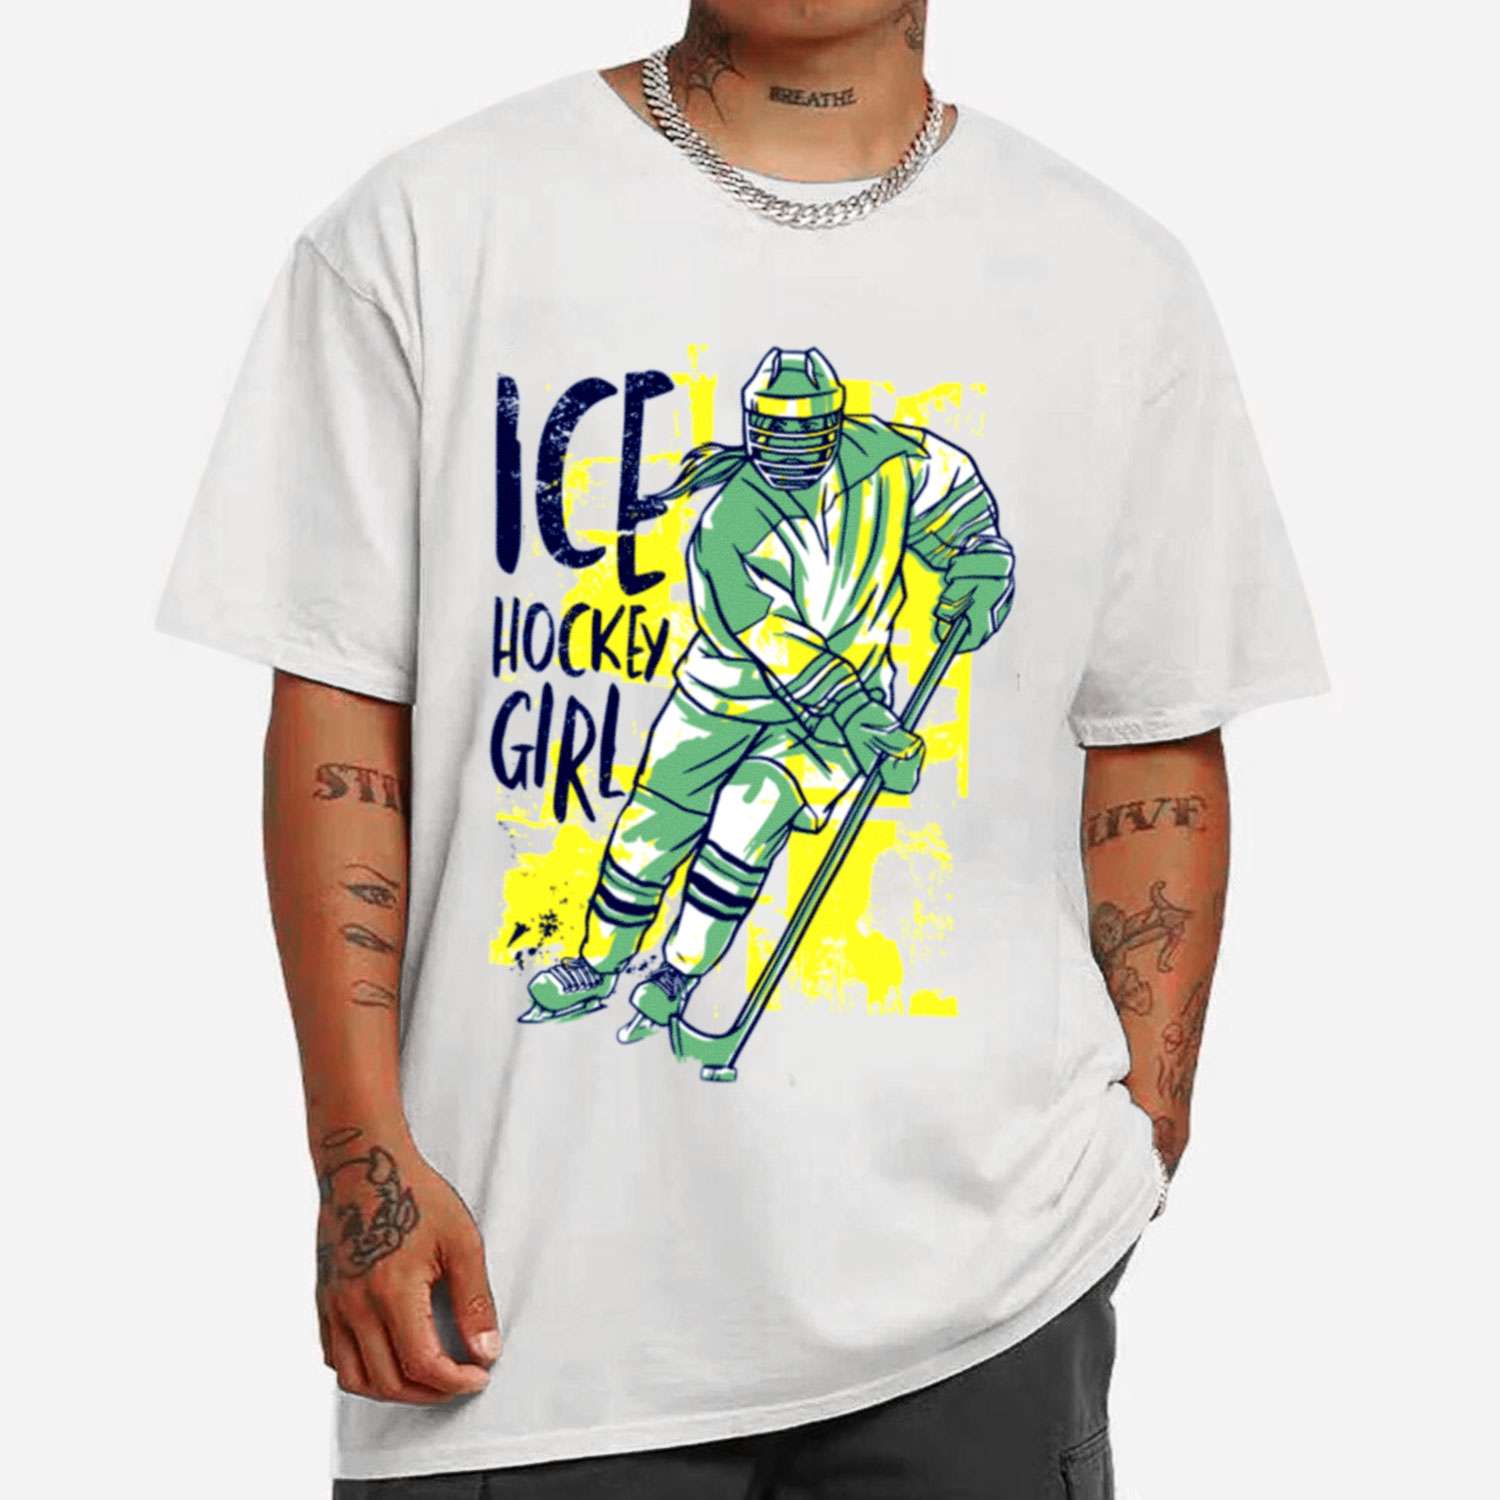 Ice Hockey Girl T-shirt